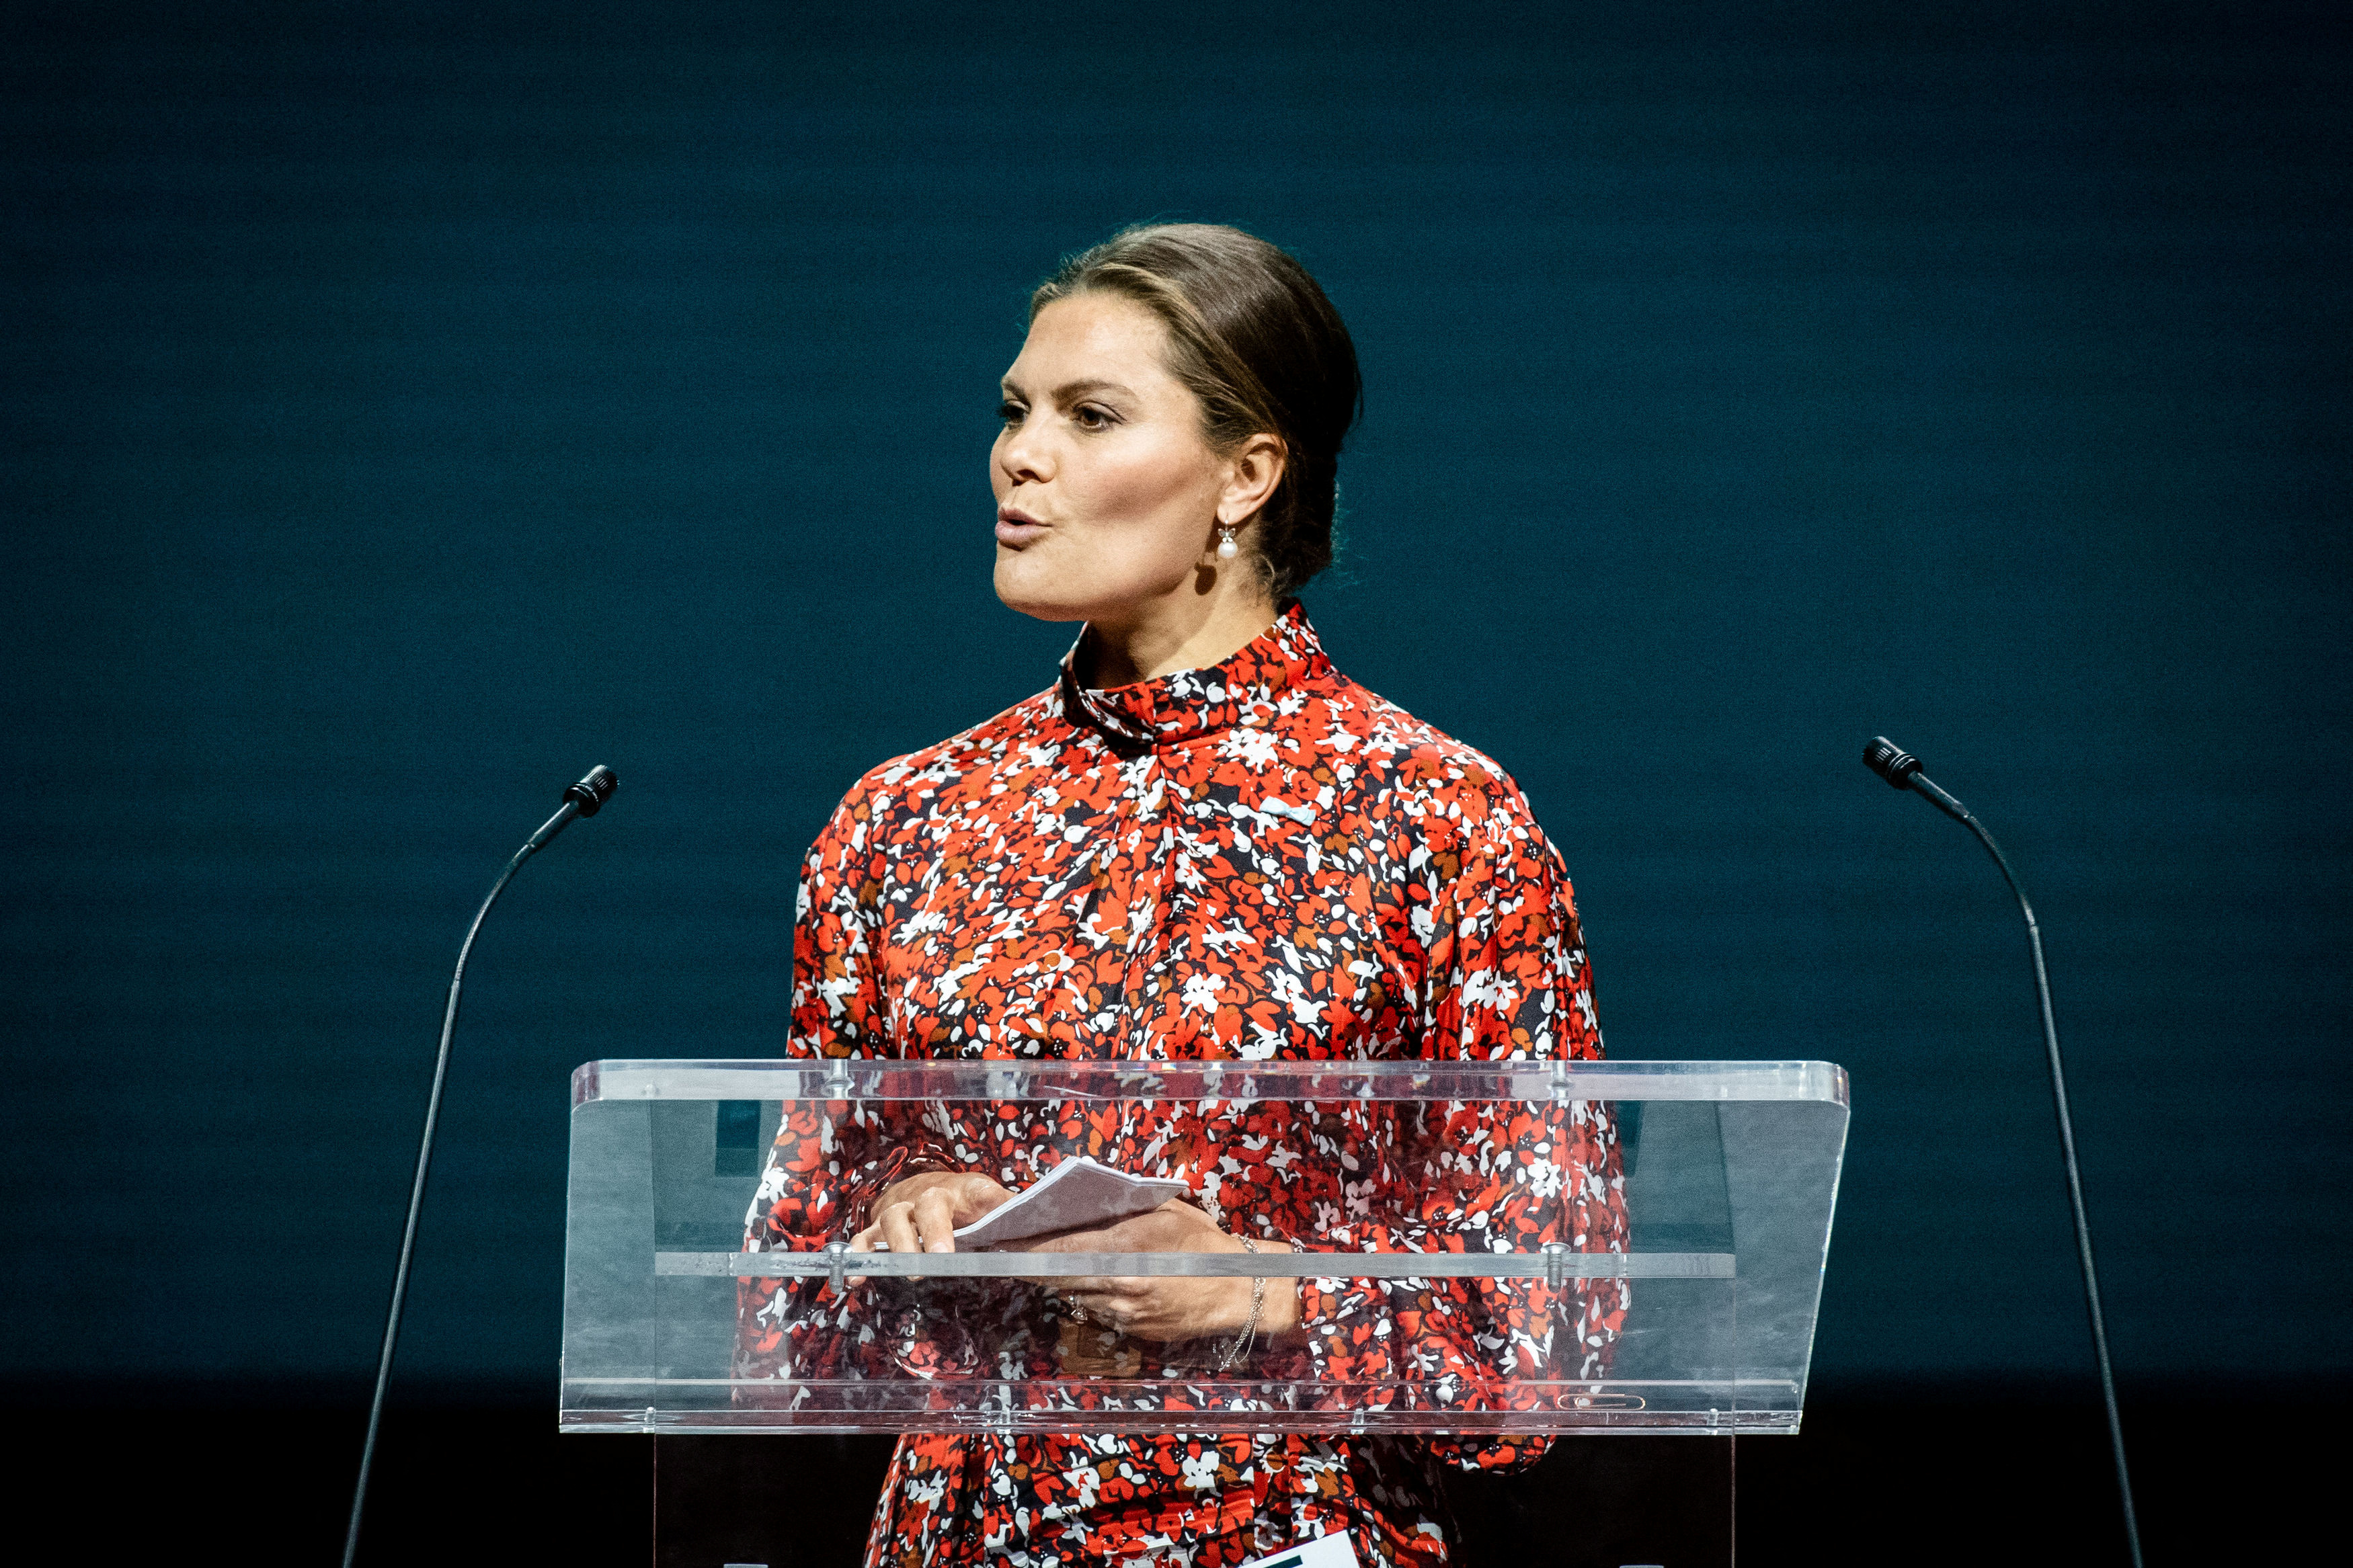 Sweden's Crown Princess Victoria speaks at the Confederation of Danish Industry Summit 2019 in Copenhagen